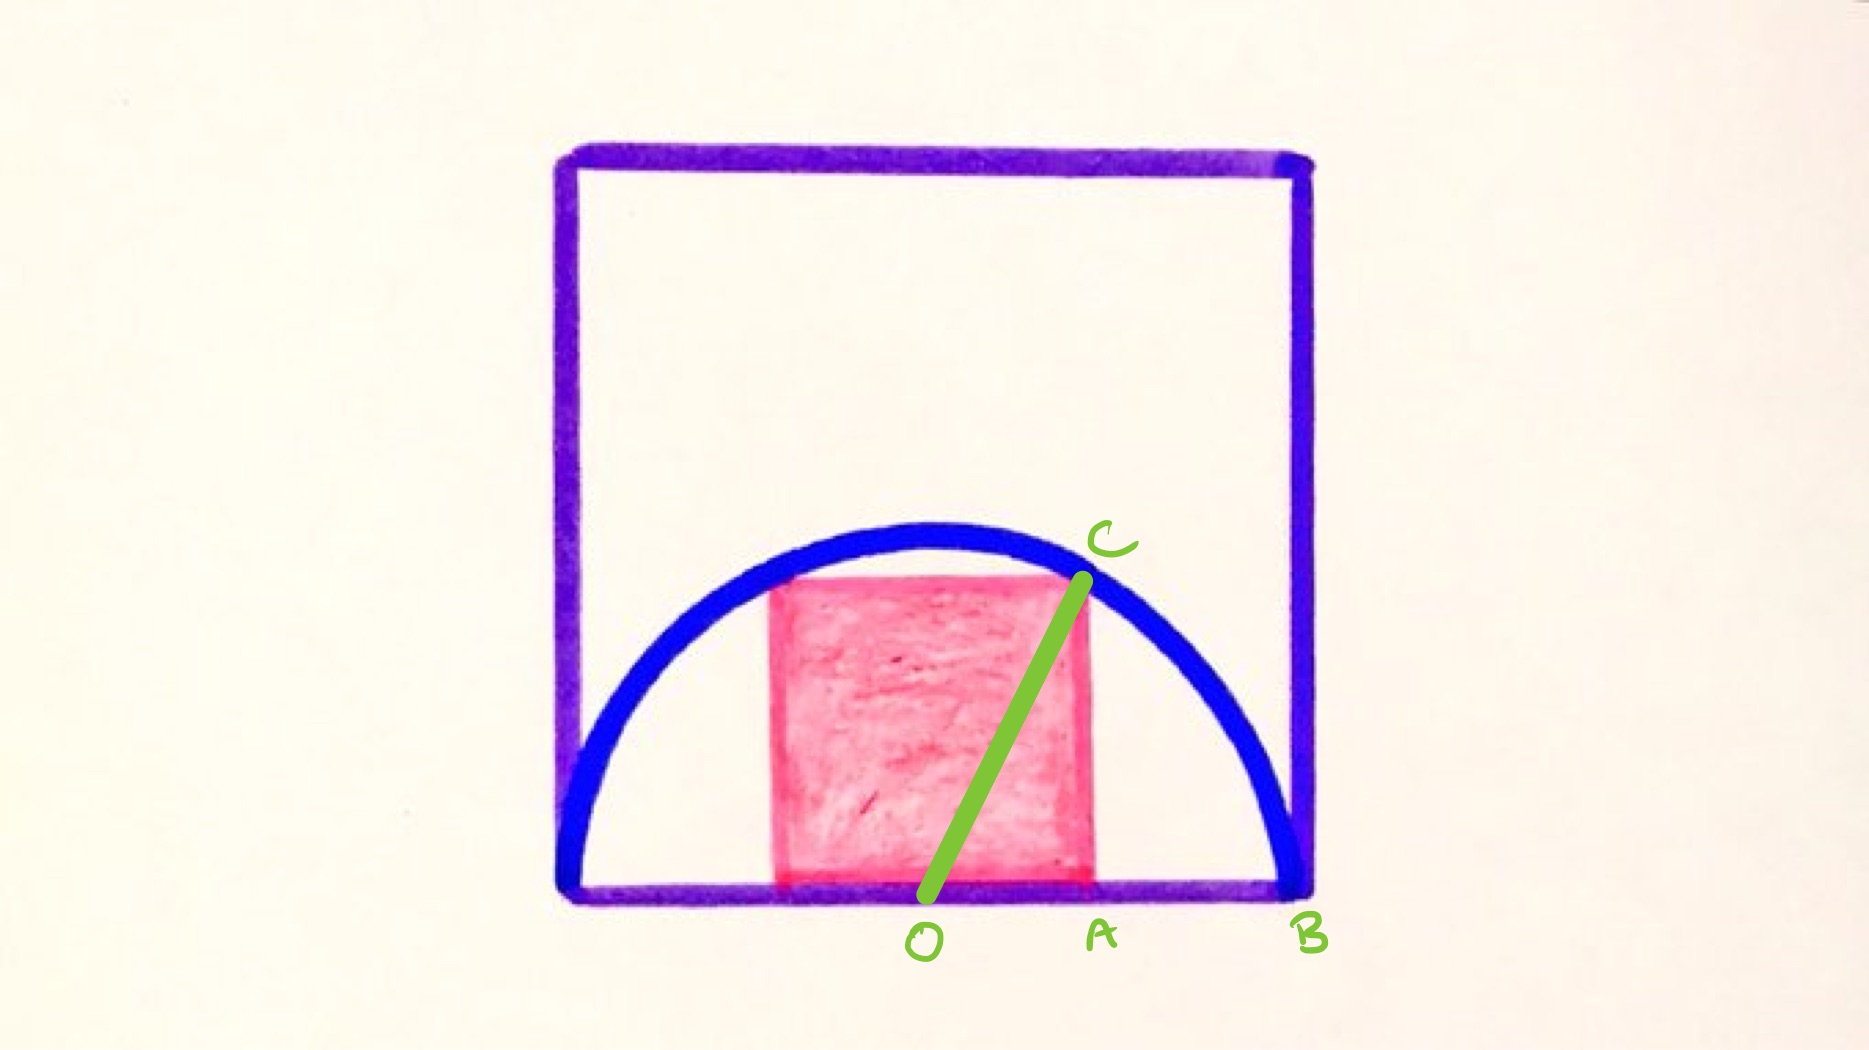 Square in a semi-circle in a square labelled